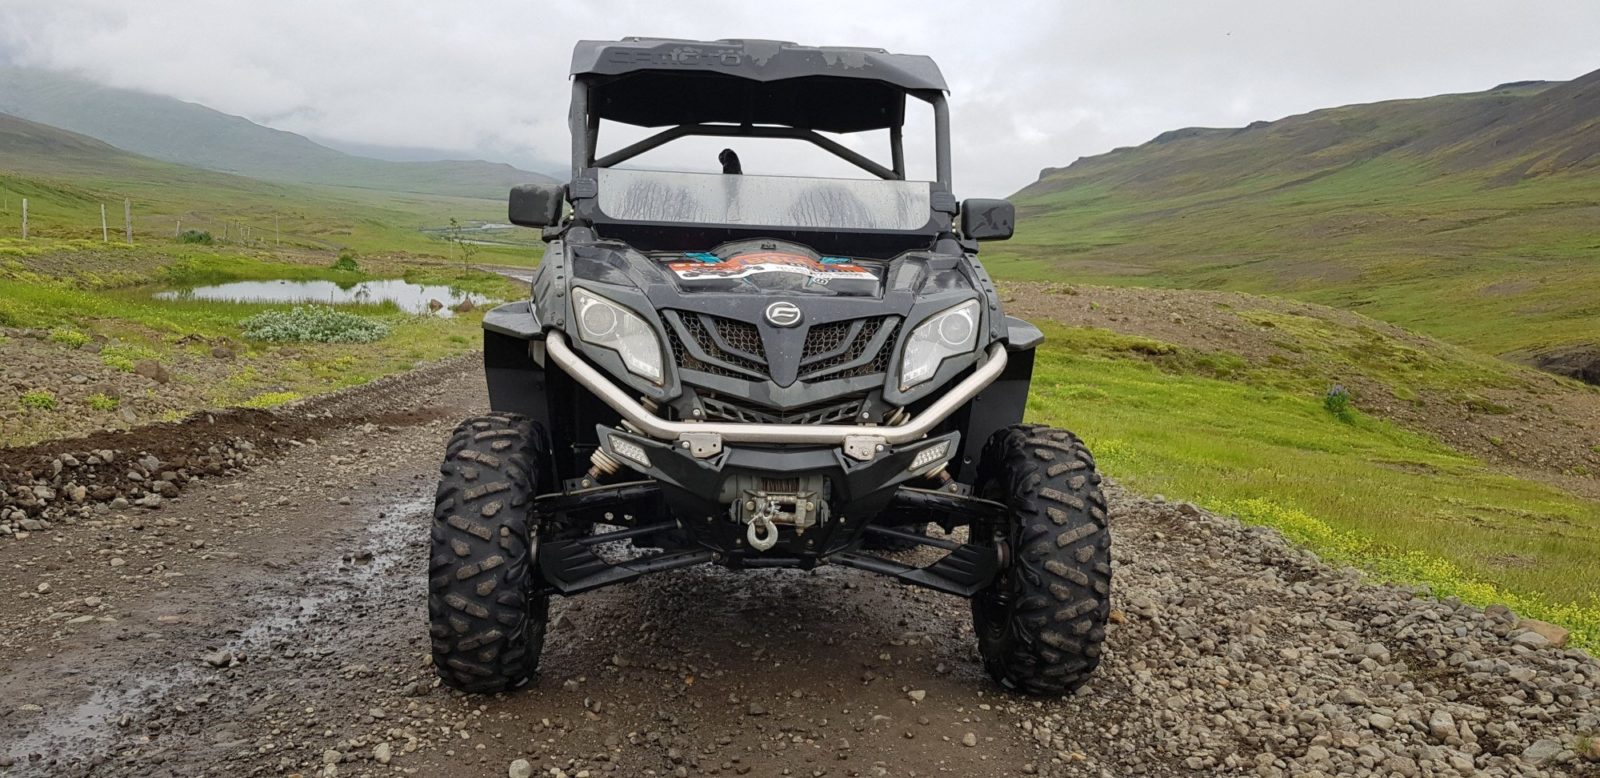 Buggy ATV vehicle in Iceland.